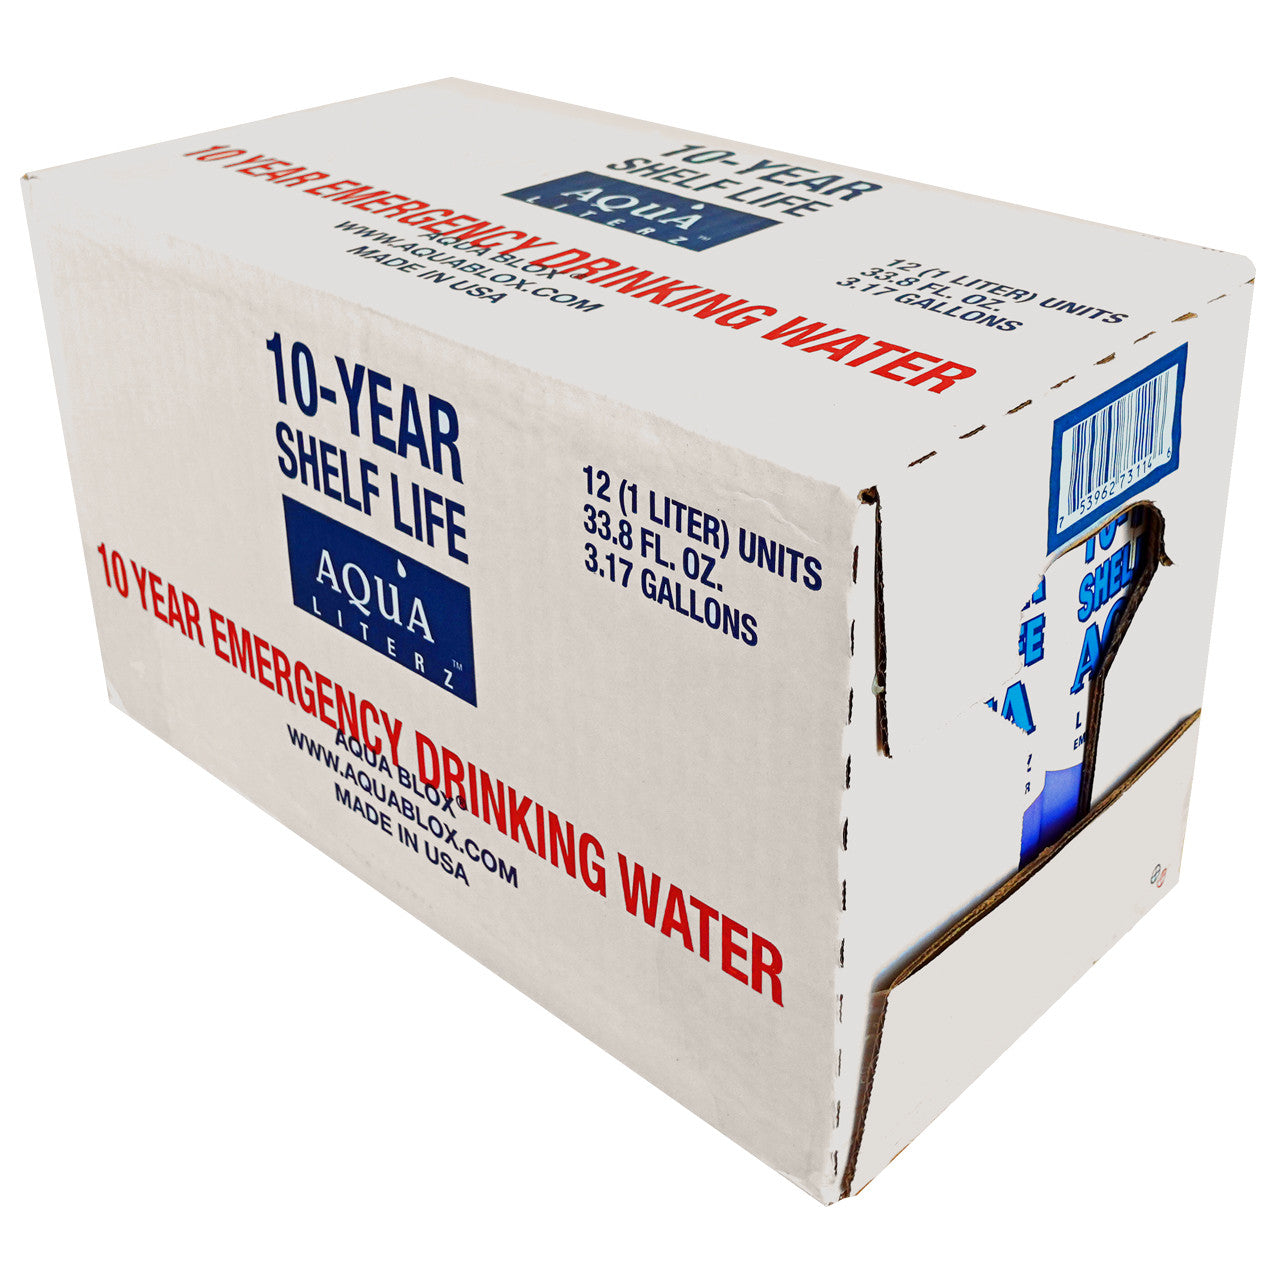 AQUA LITERZ EMERGENCY DRINKING WATER - 10 YEAR SHELF LIFE - PALLET OF 900 LITERS